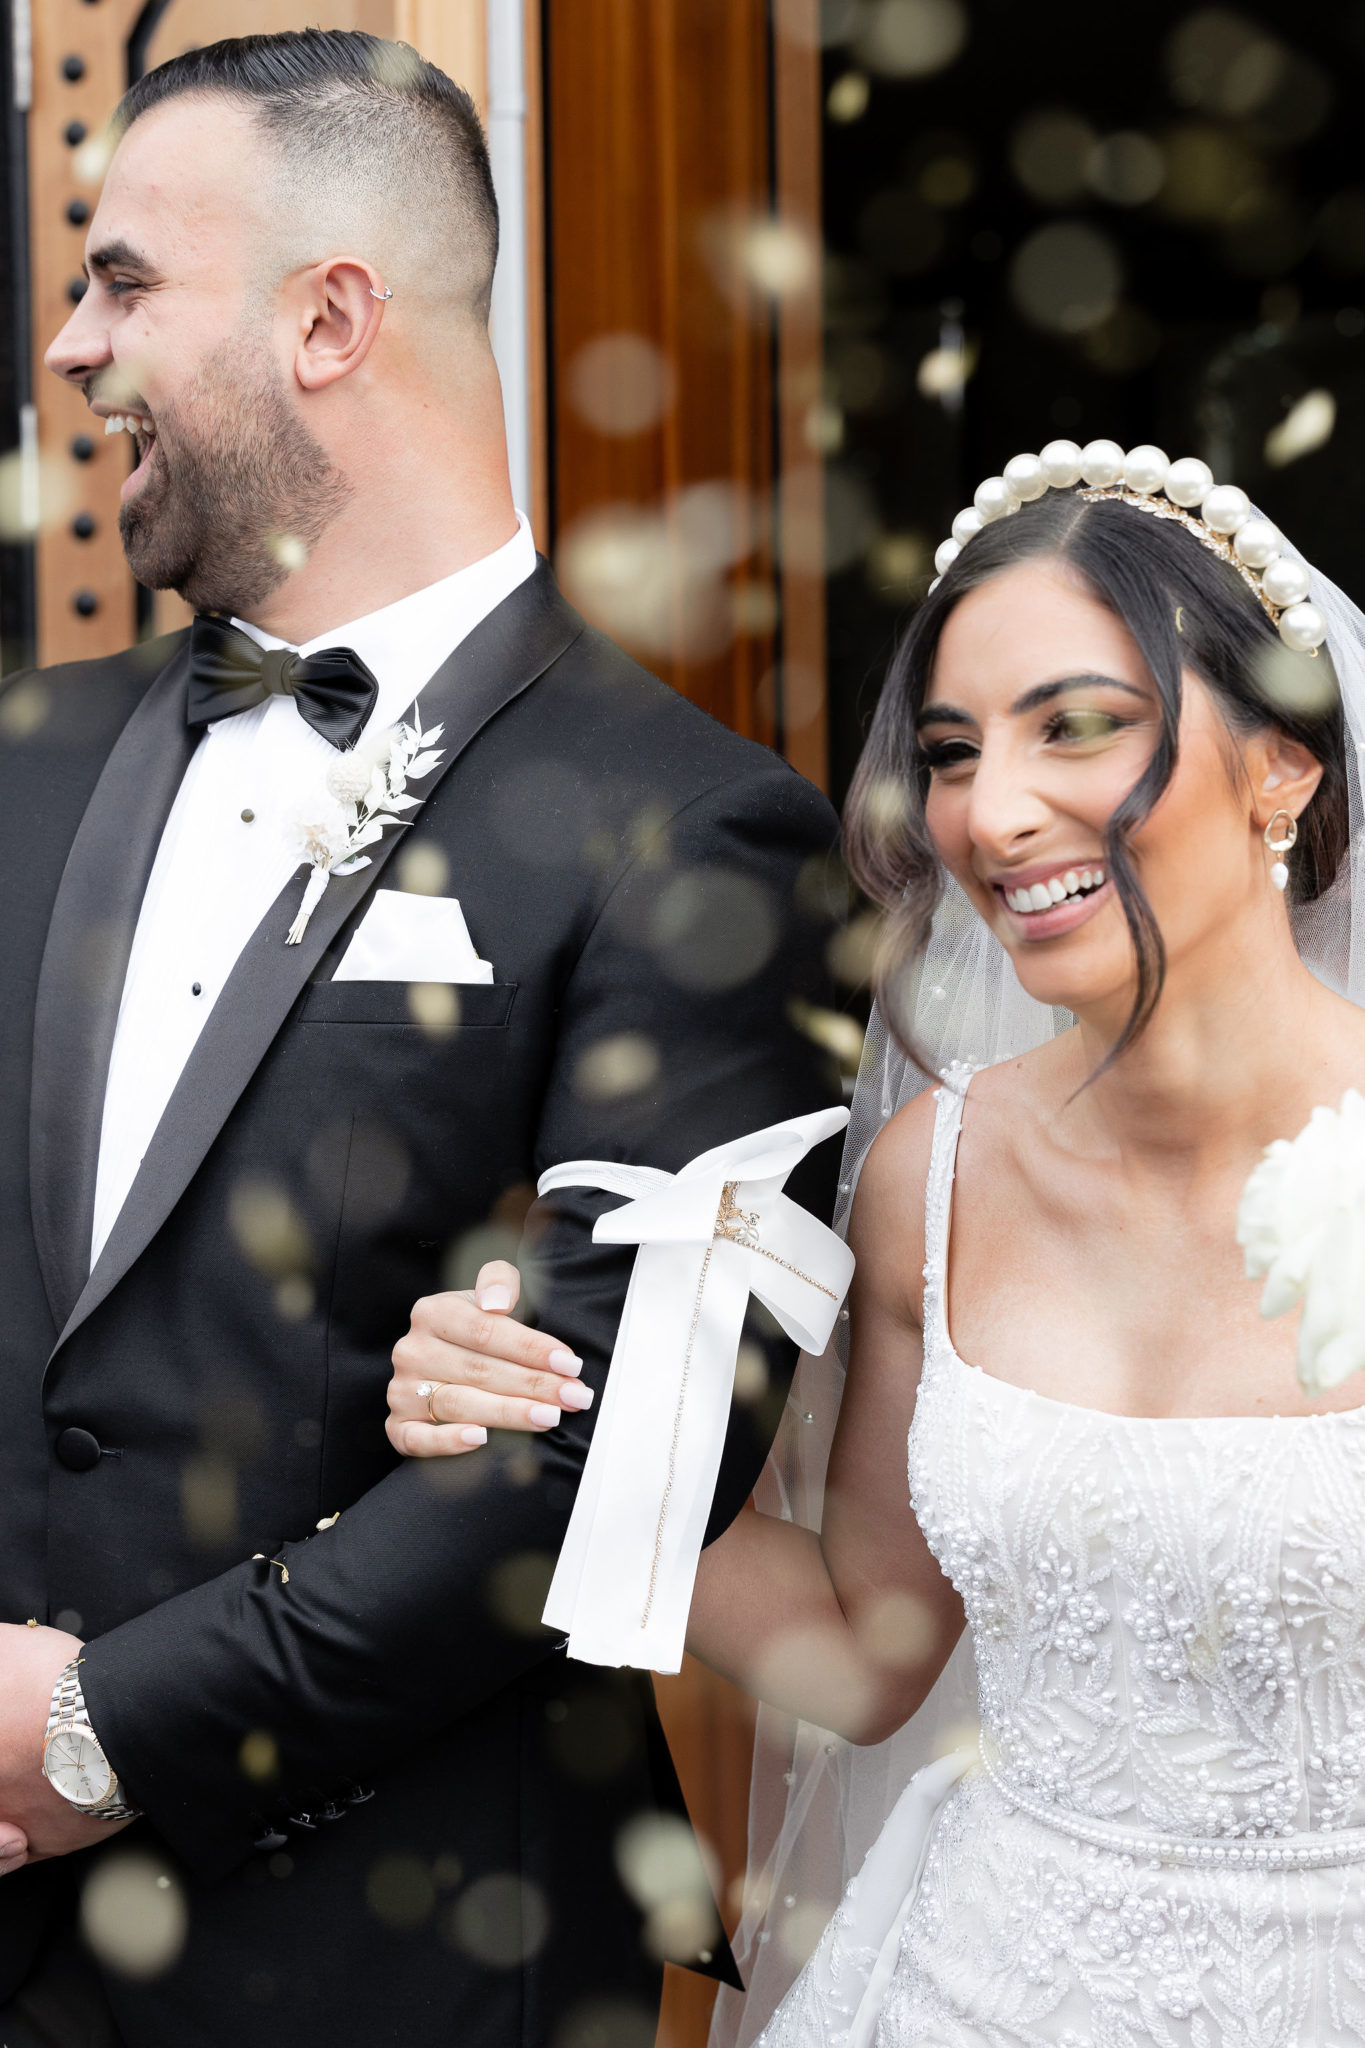 This Bride Rocked a Super Glam & Sexy Bridal Gown - Wedded Wonderland